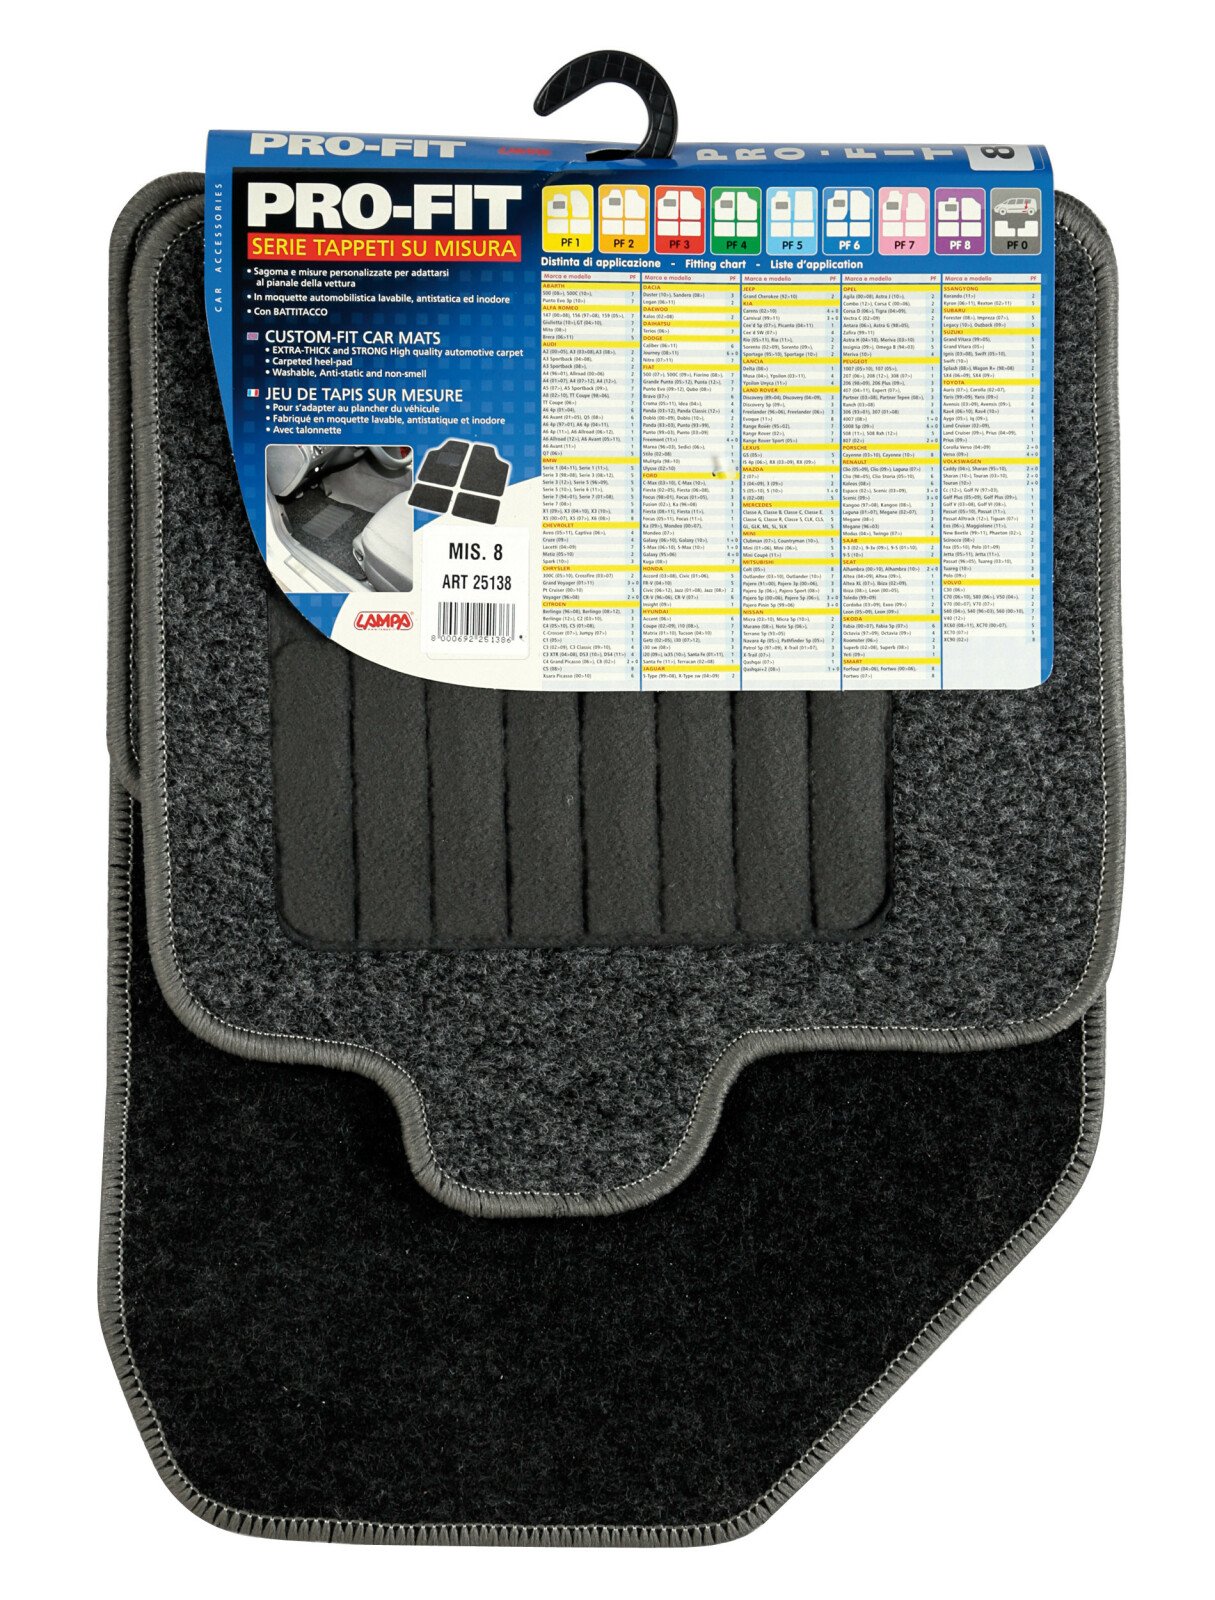 Pro-Fit custom-fit car mats - PF-8 thumb